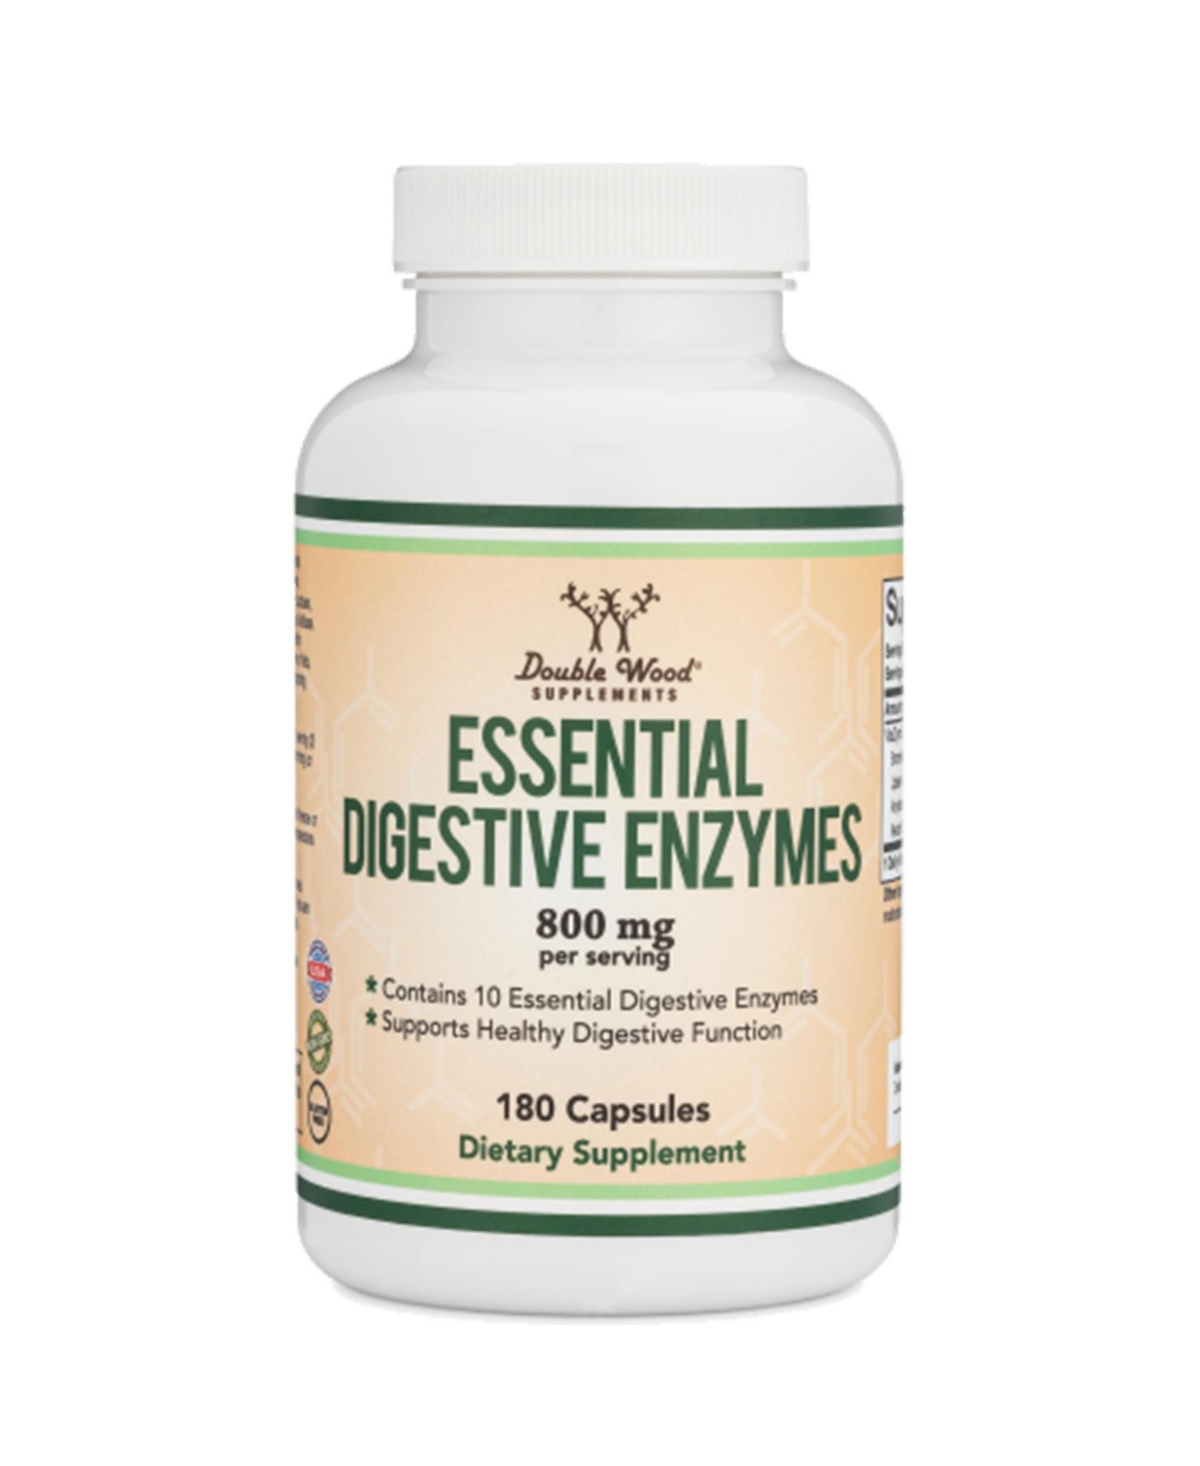 Essential Digestive Enzymes - 180 capsules, 800 mg servings